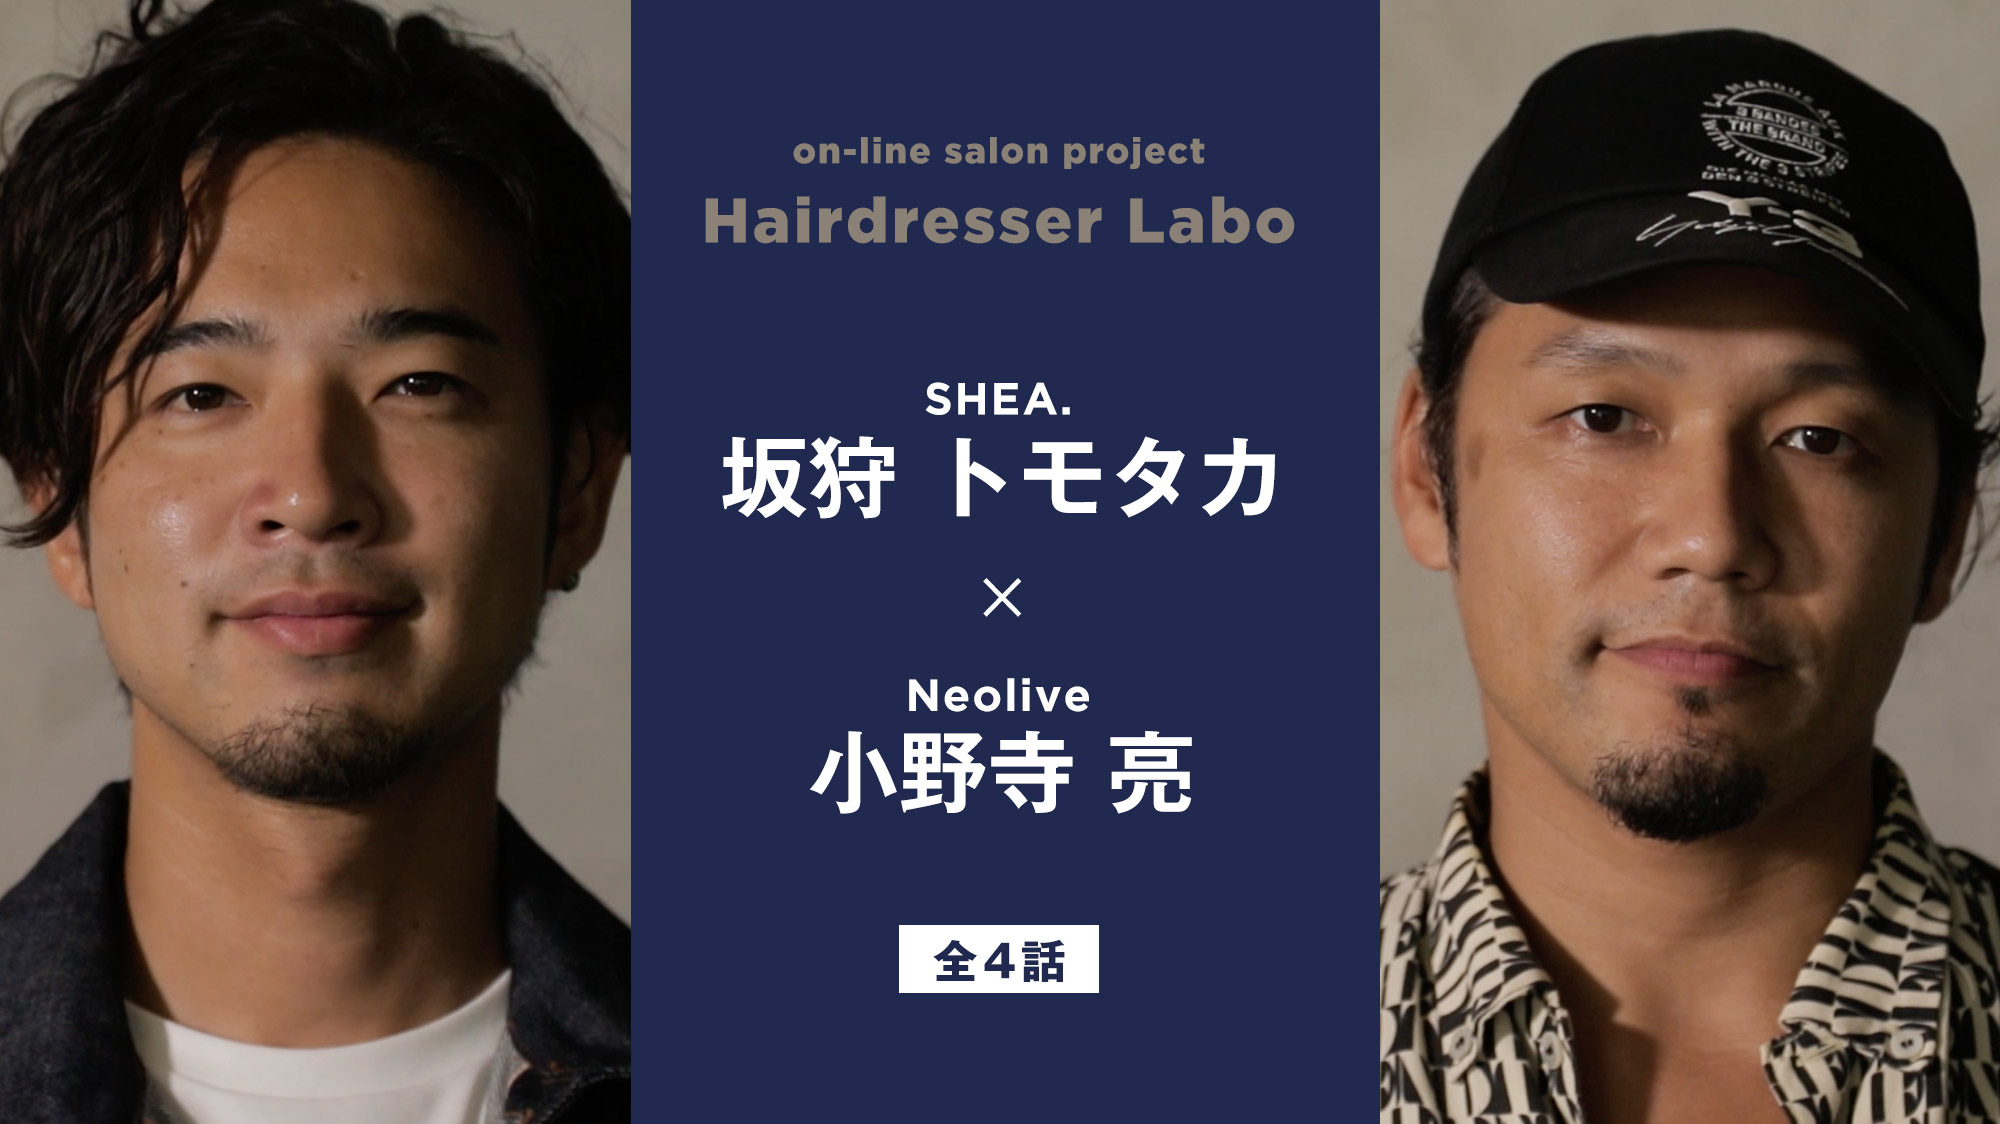 on-line salon project Hairdresser Labo『坂狩 トモタカ × 小野寺 亮』対談